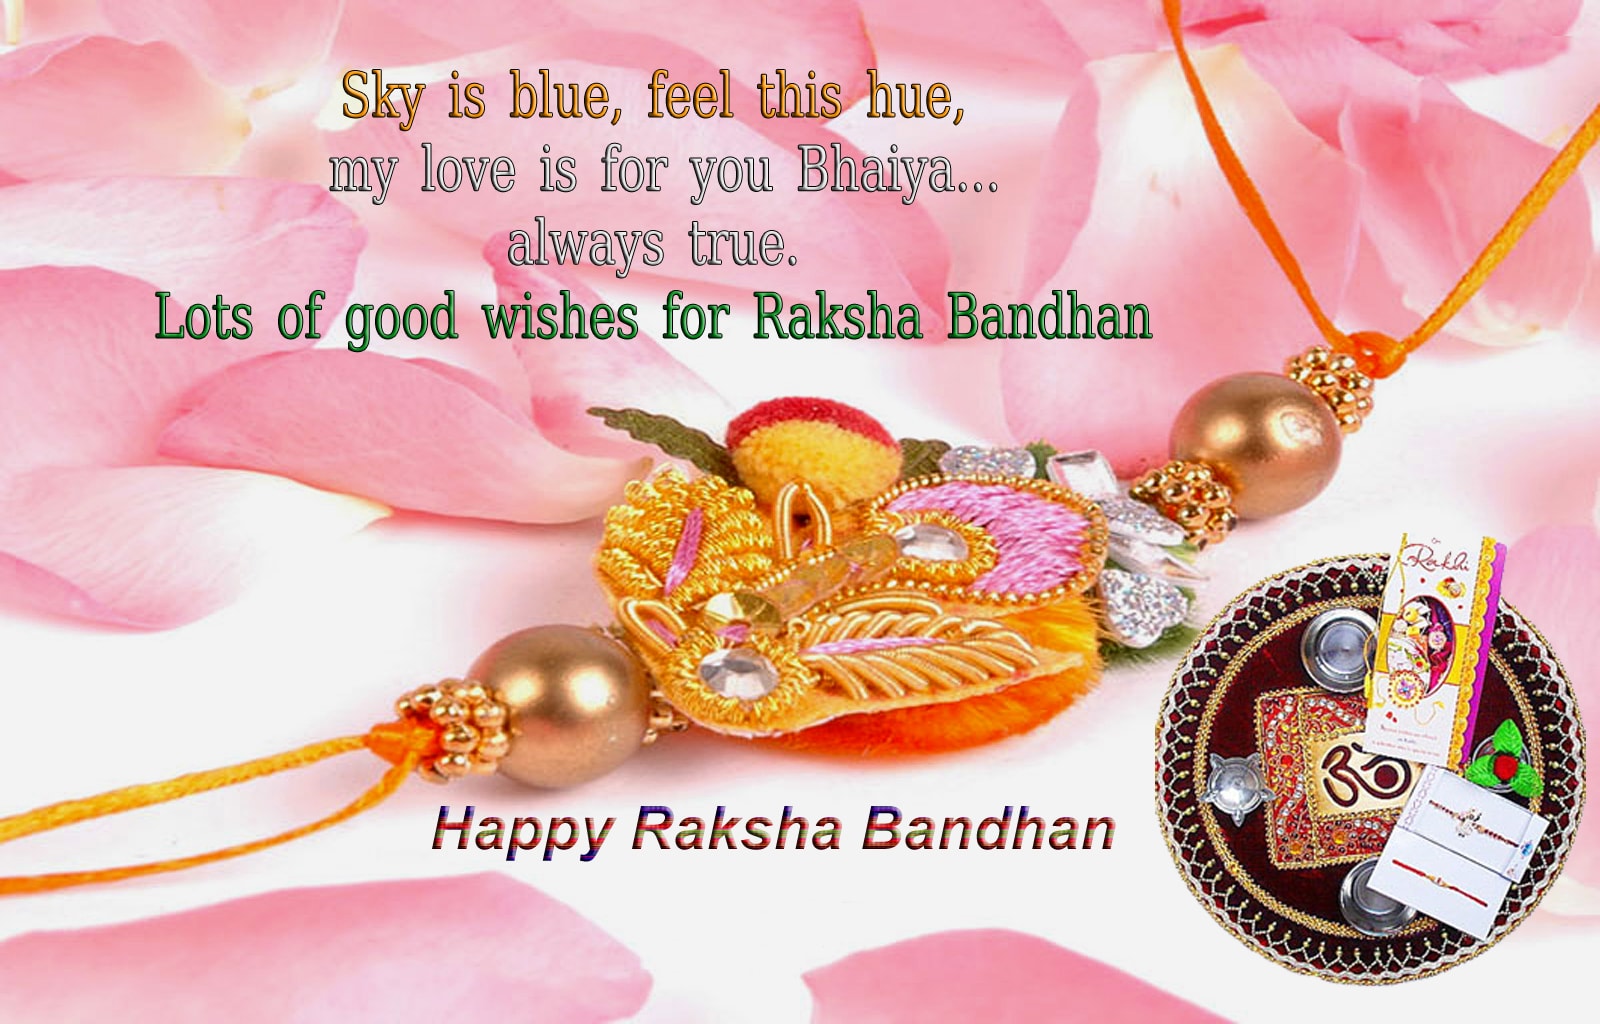 Happy Raksha Bandhan 2020 Messages Quotes Images in HD Free Download